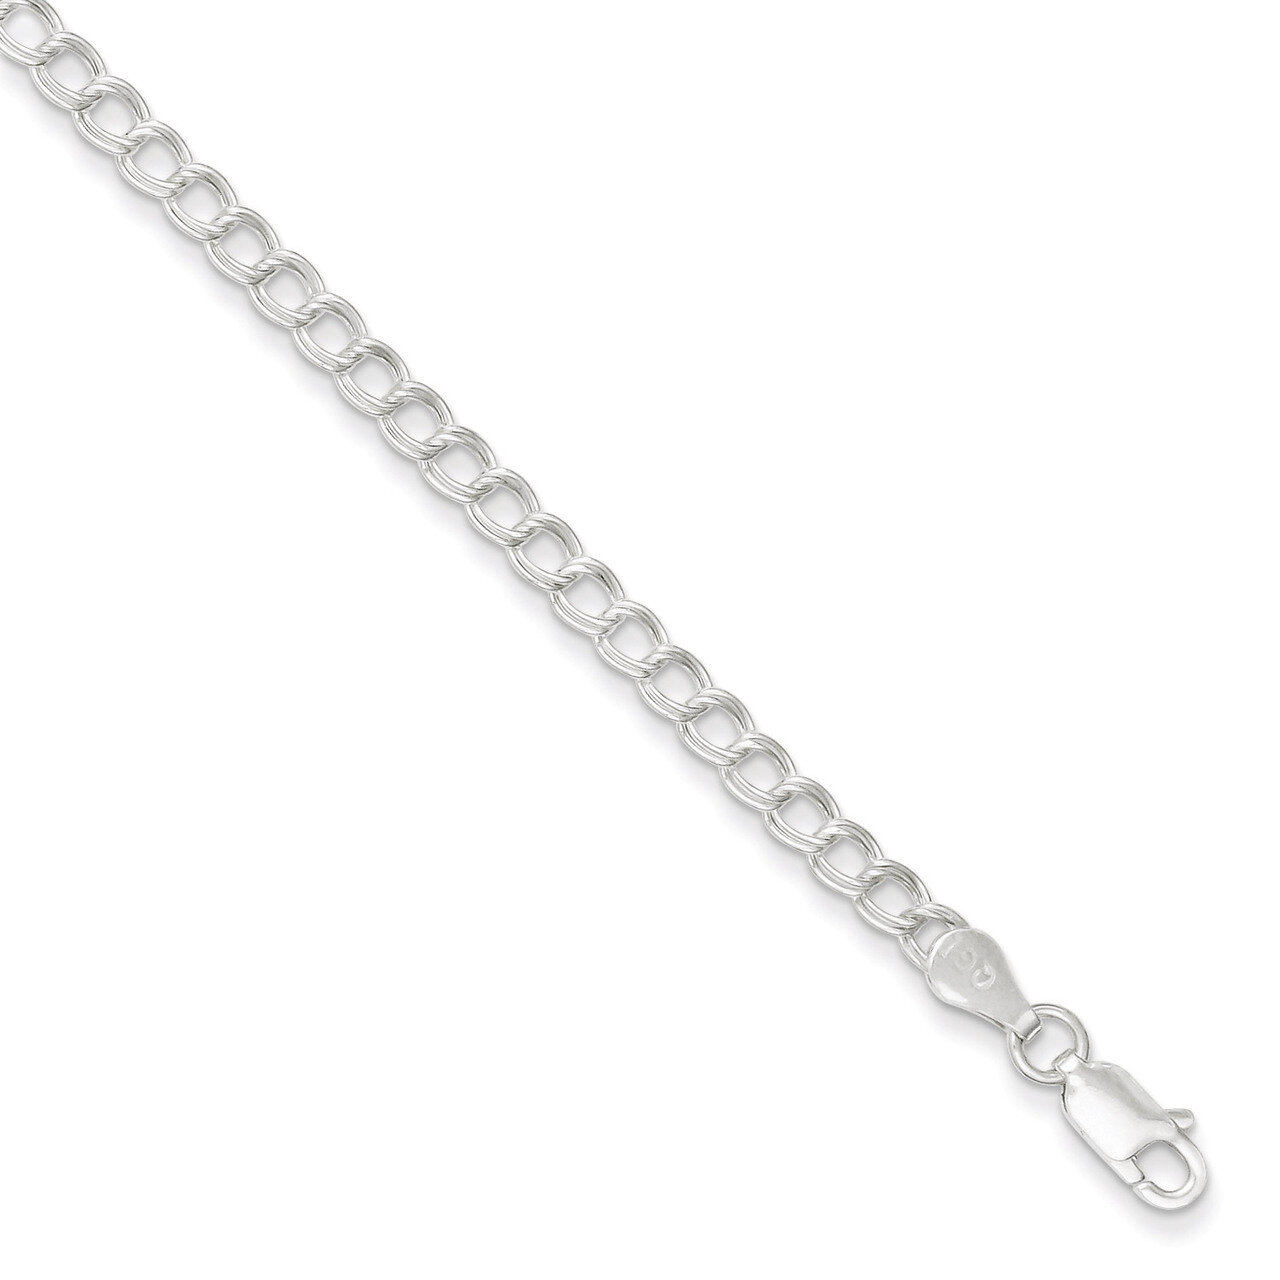 7 Inch Charm Bracelet Sterling Silver Polished QCH050-7